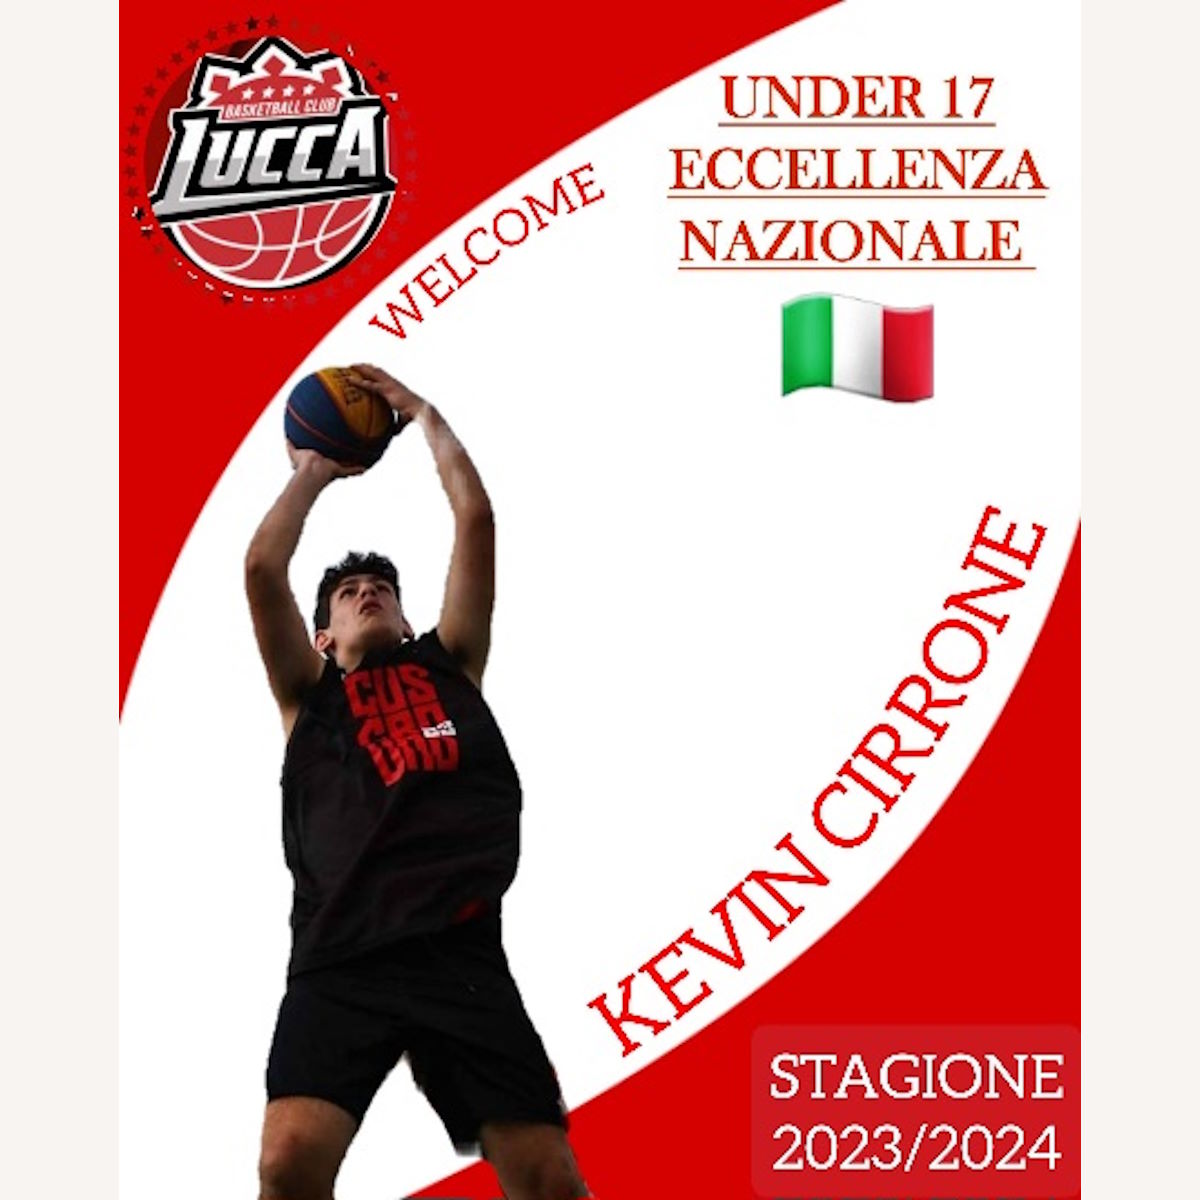 CIRRONE K. Vola al Basketball Club Lucca